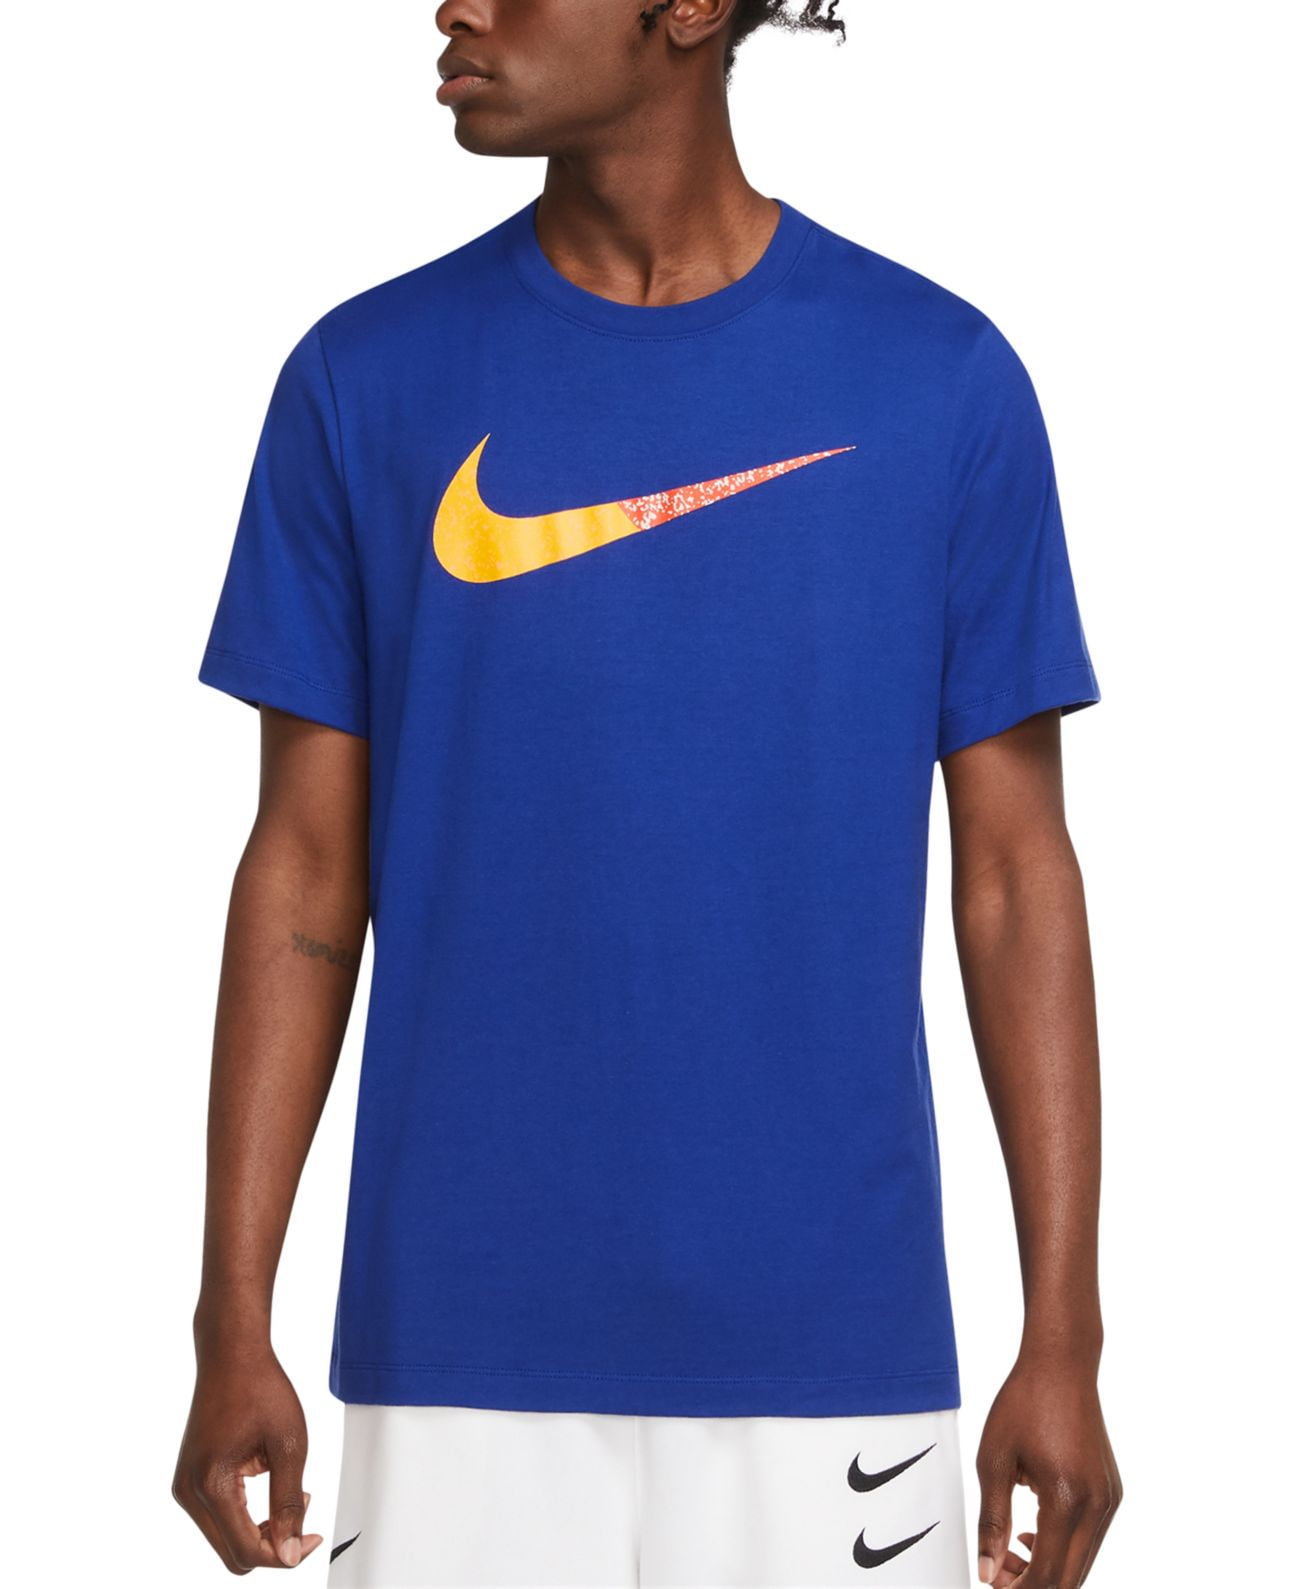 Nike Mens Swoosh T Shirt,Royal,Medium 